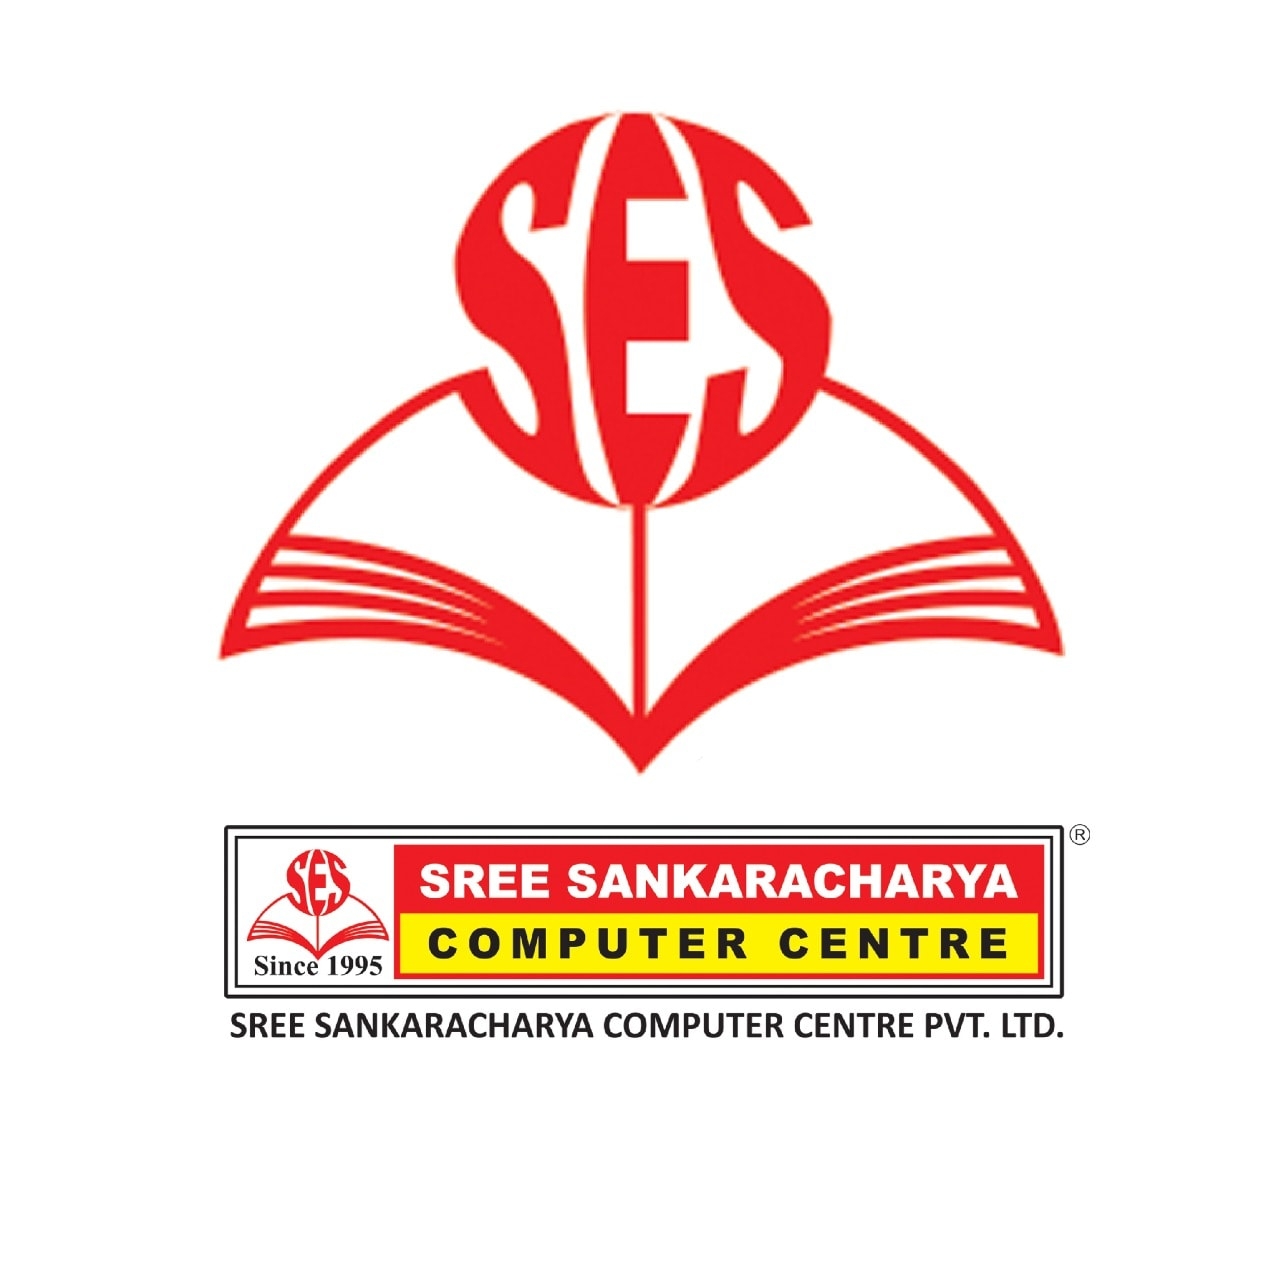 Sree Sankaracharya Computer Centre Pvt Ltd|Accounting Services|Professional Services